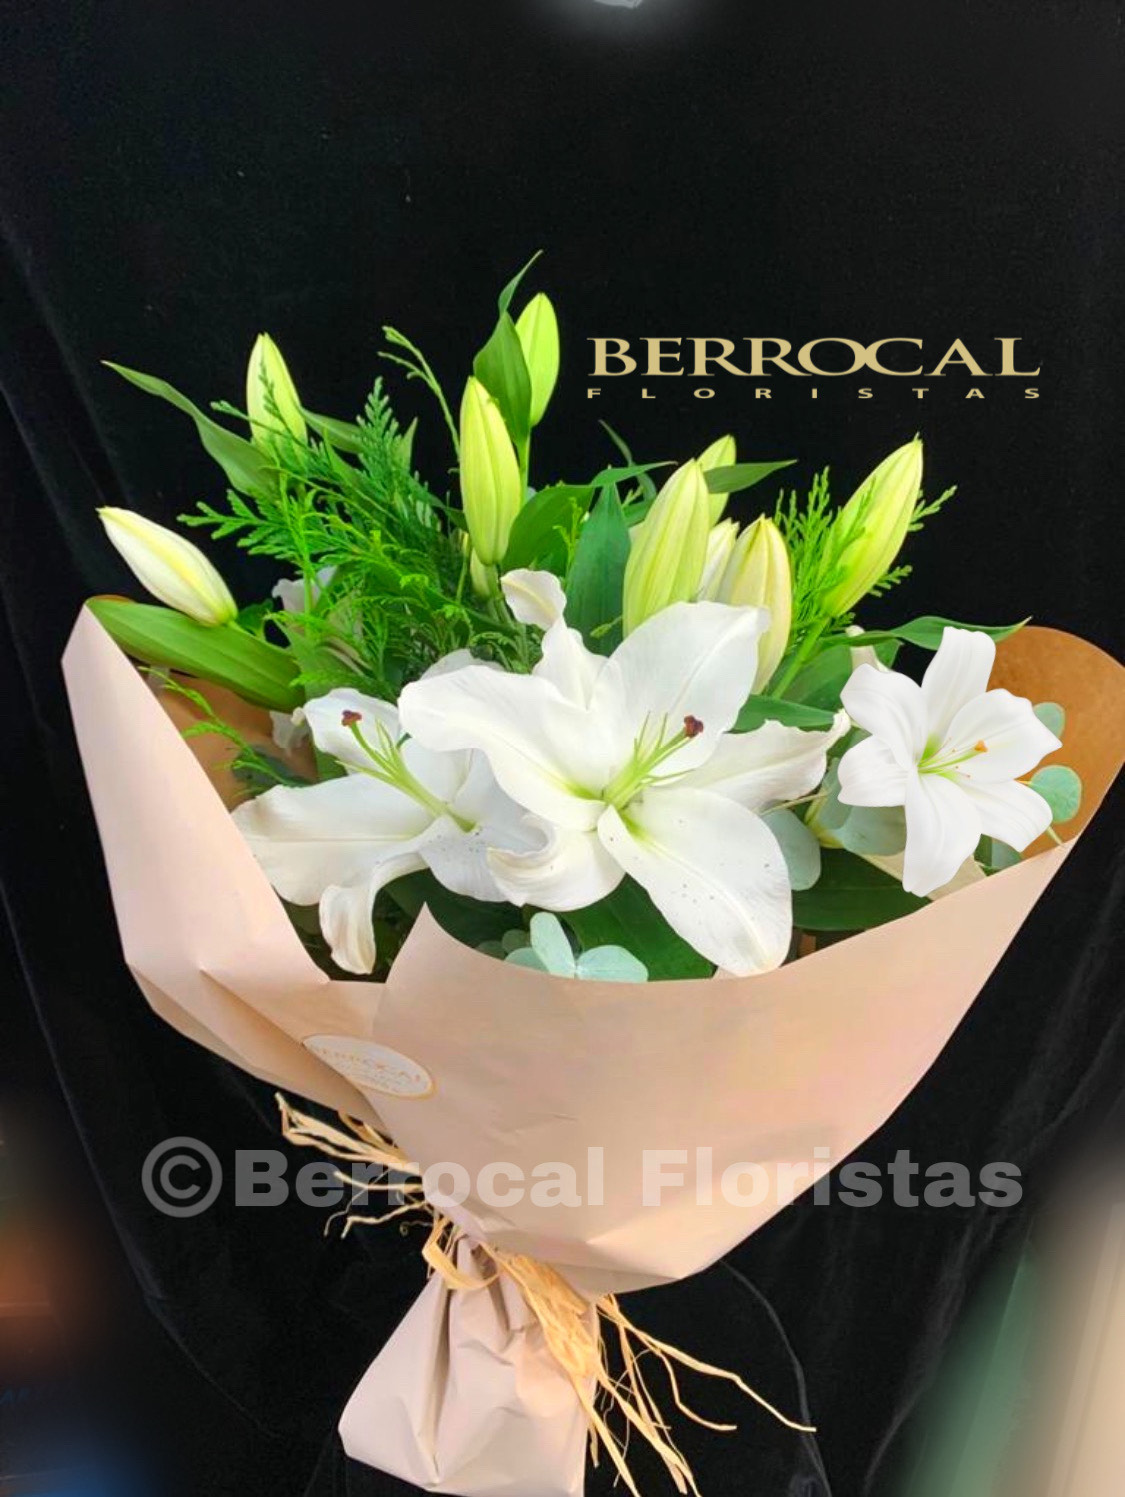 R-14 Bouquet of white oriental Lilies. - Floristería en Marbella Berrocal  flores a domicilio.